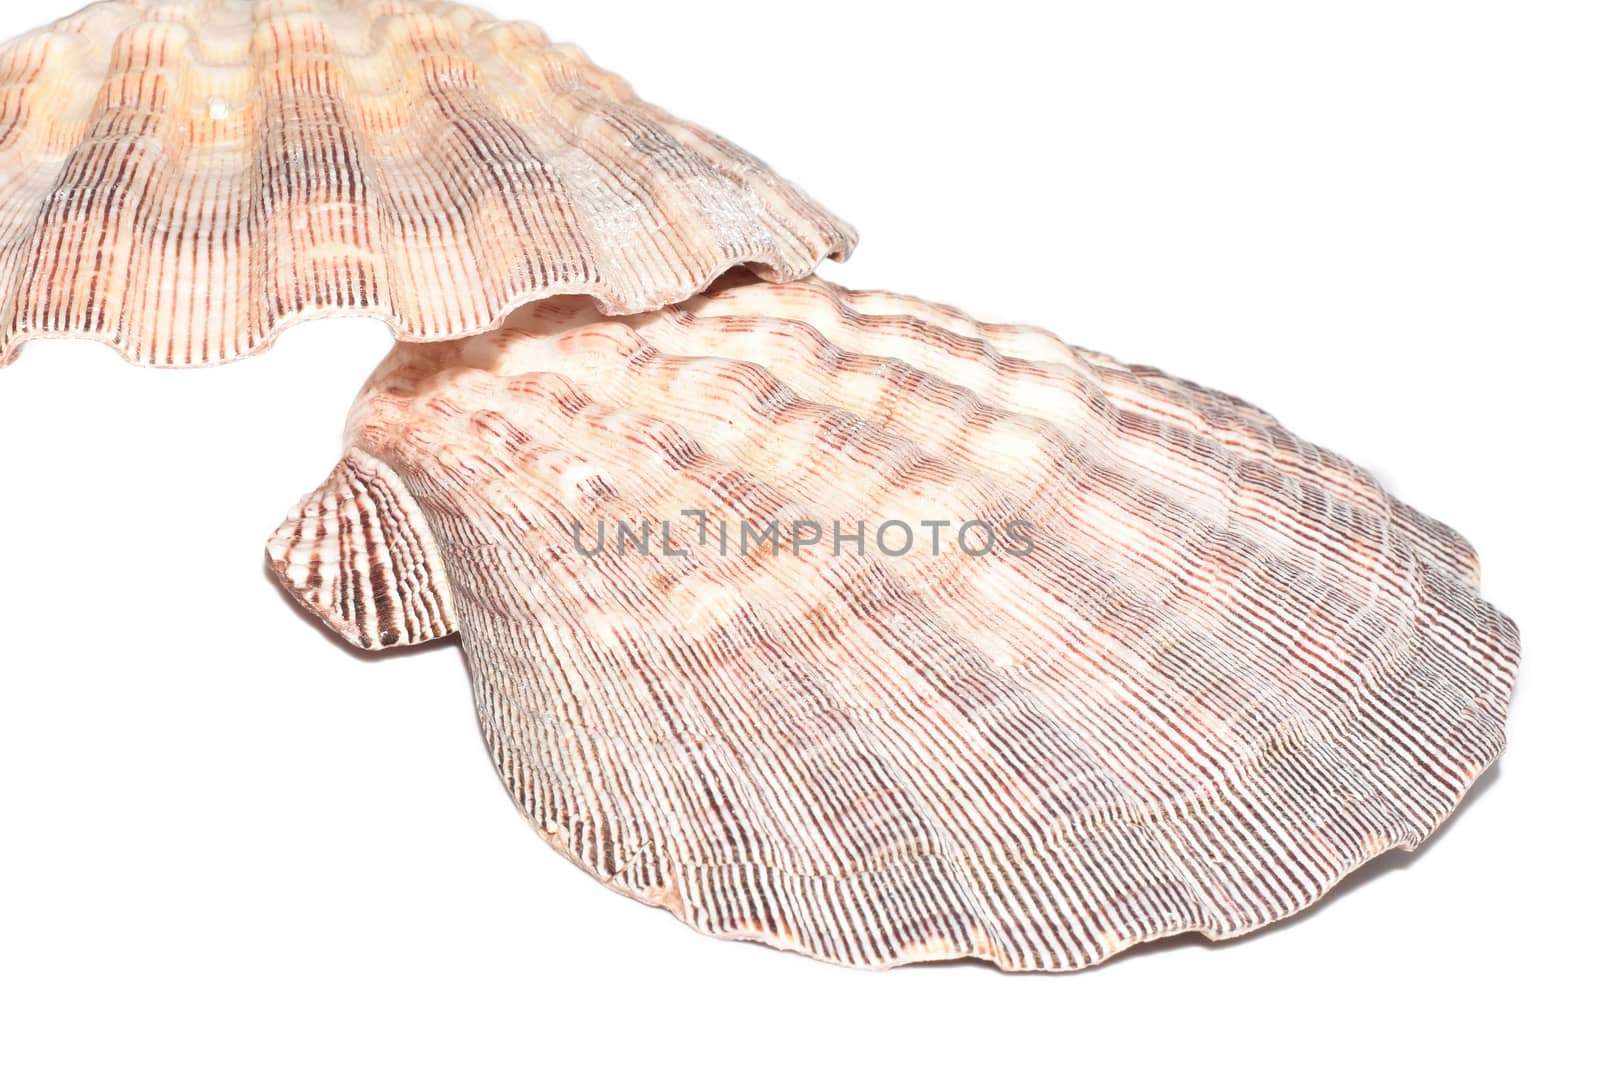 The Marine Mollusca Lyropecten nodosus on a white background